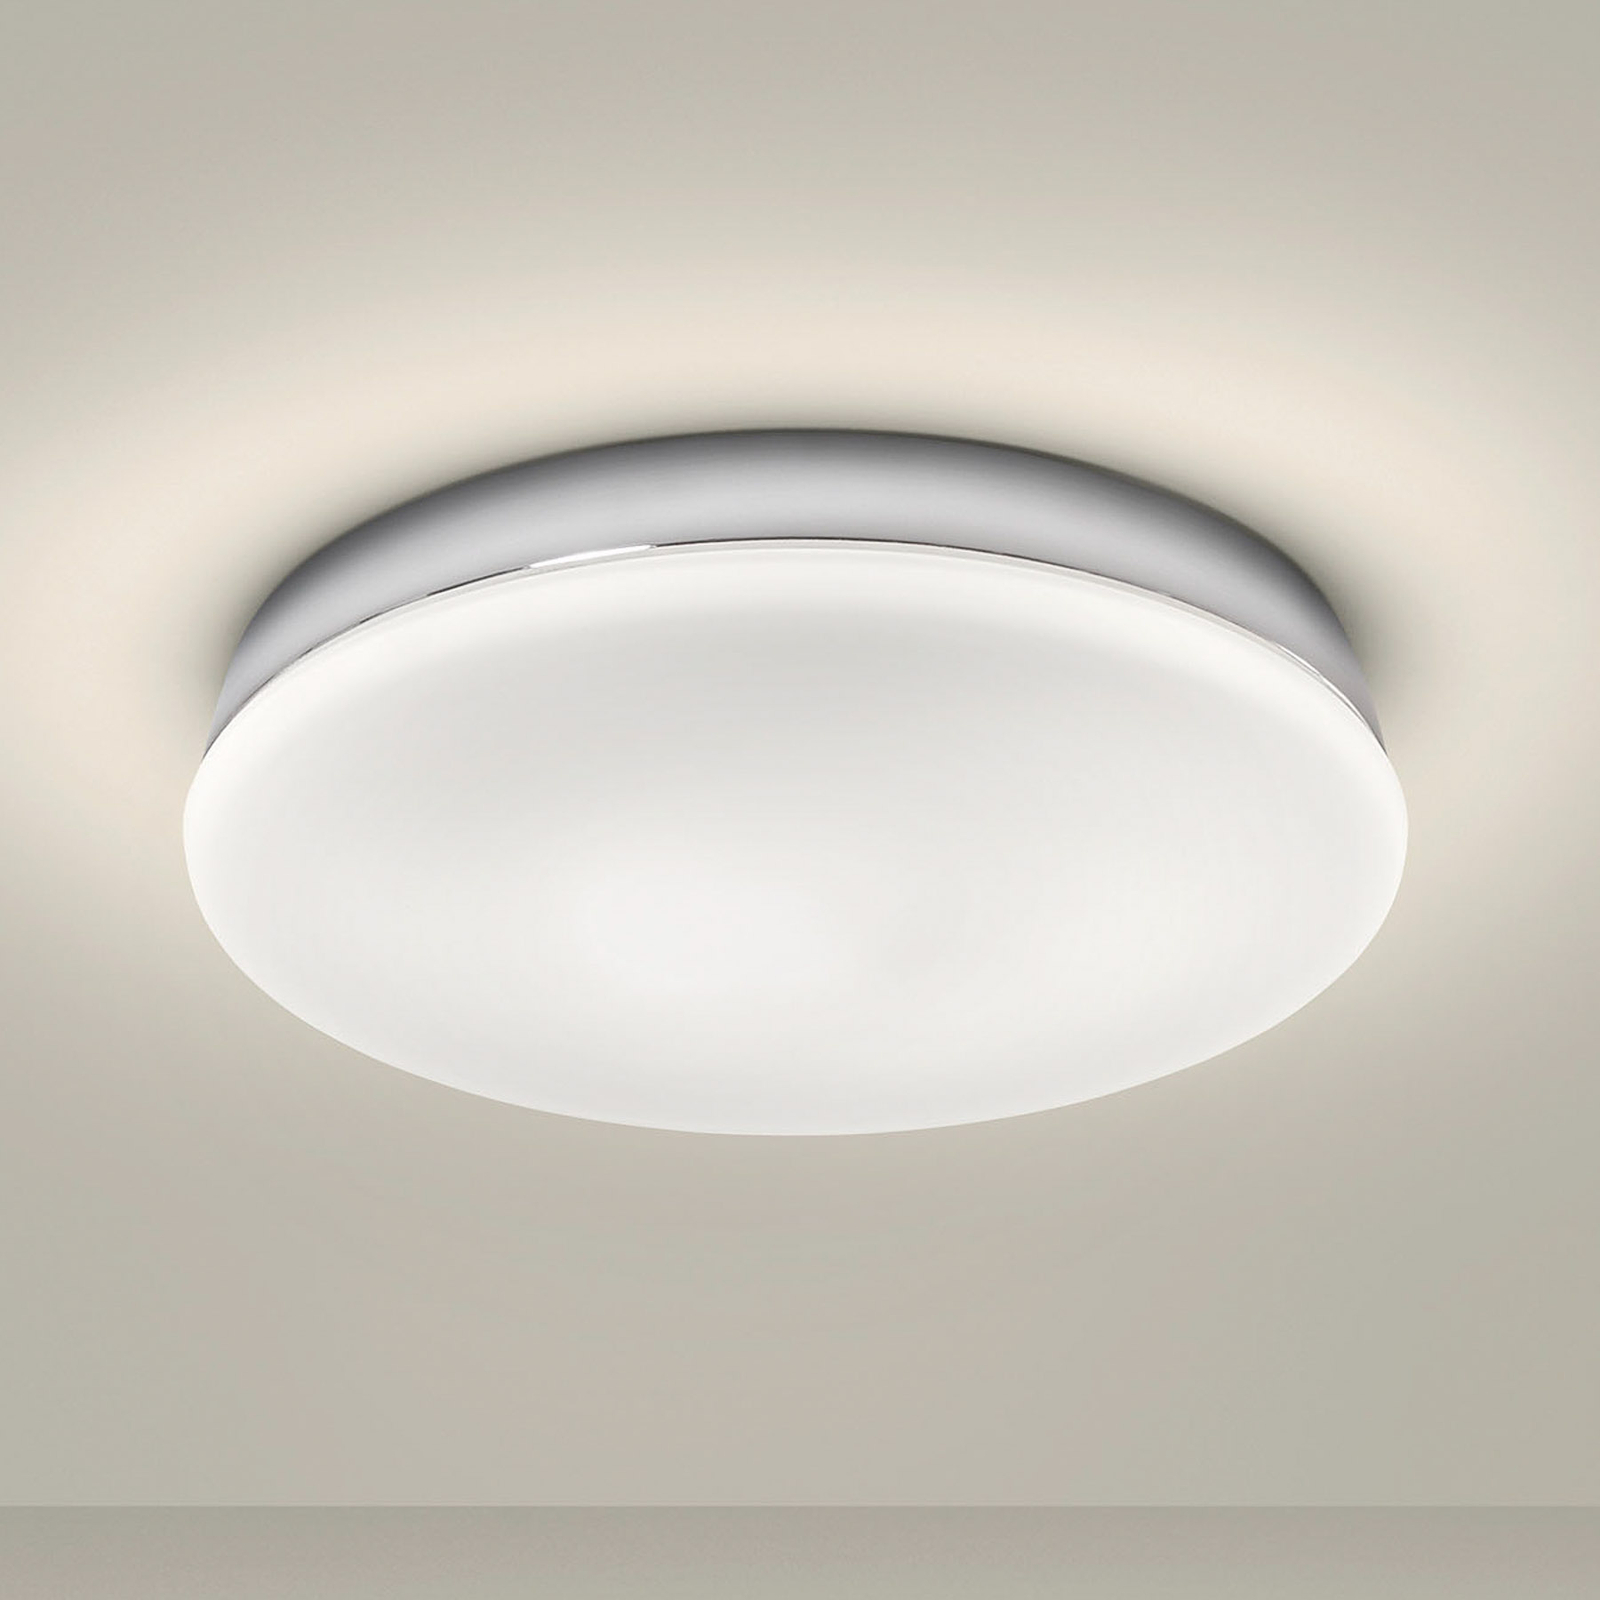 LEDS-C4 Circle LED ceiling light made of glass